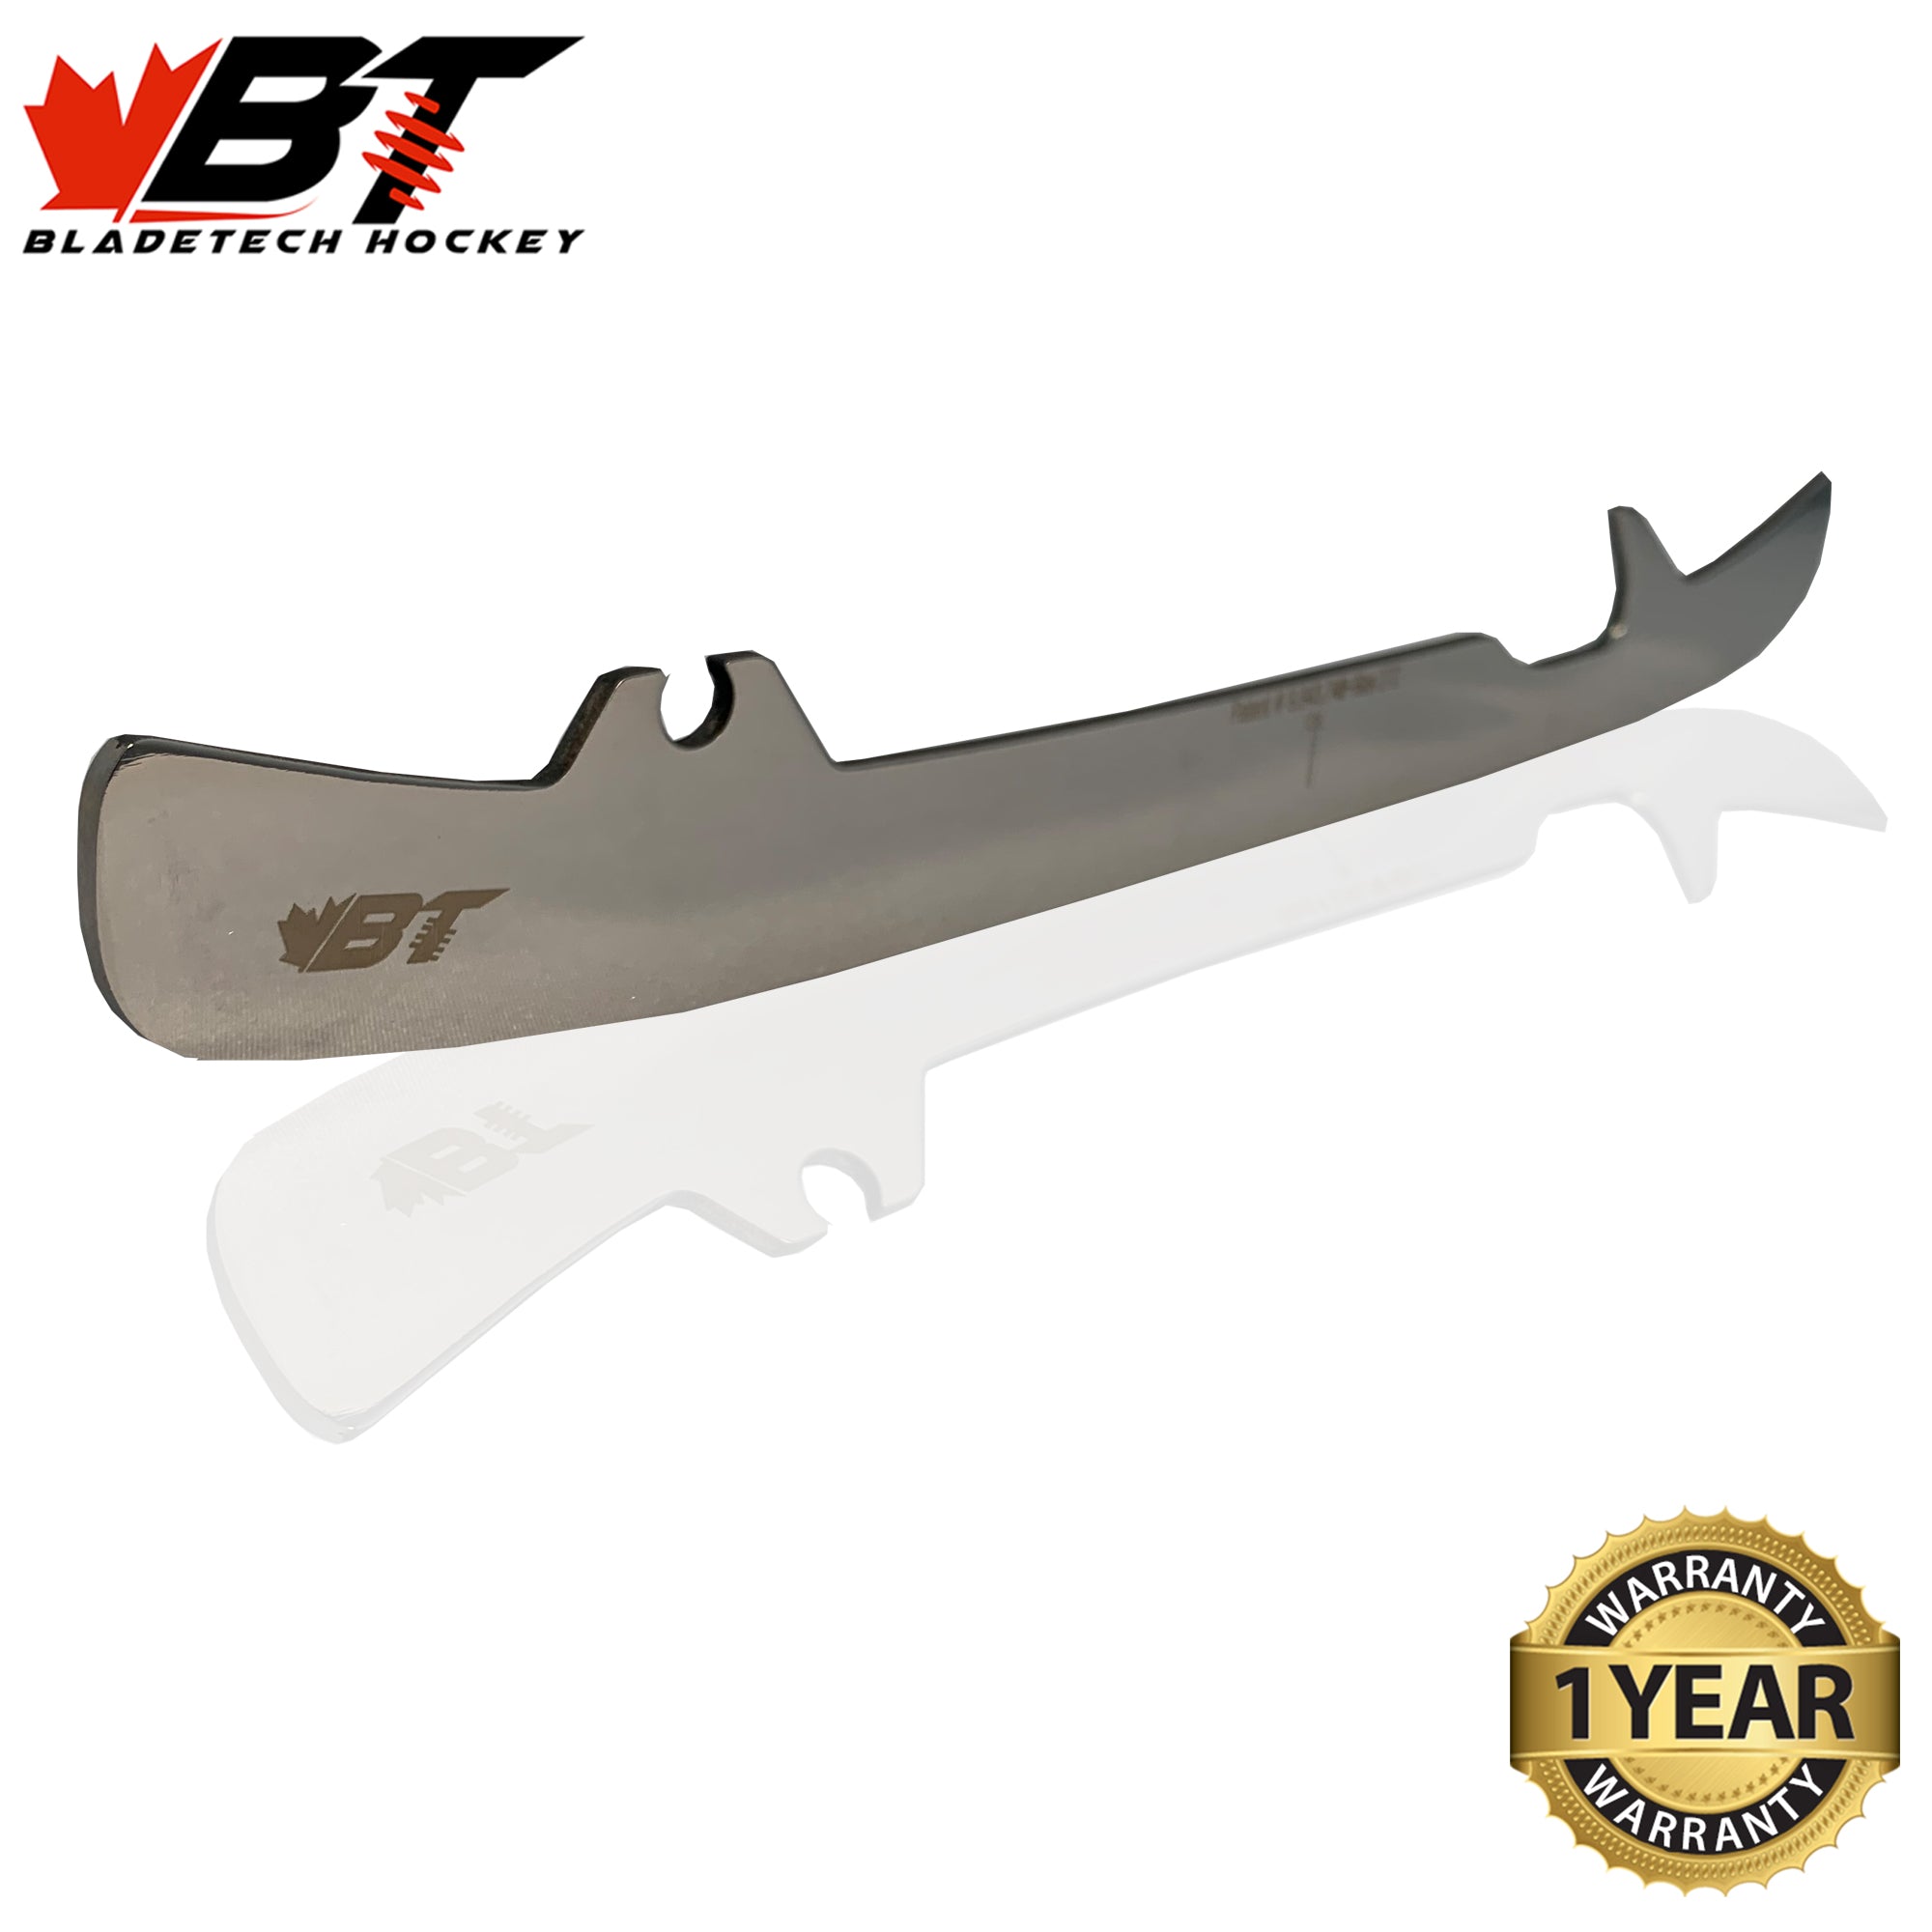 Bladetech Mirror Stainless Steel Blades - LS II - Tydan Specialty Blades Inc. (Canada)